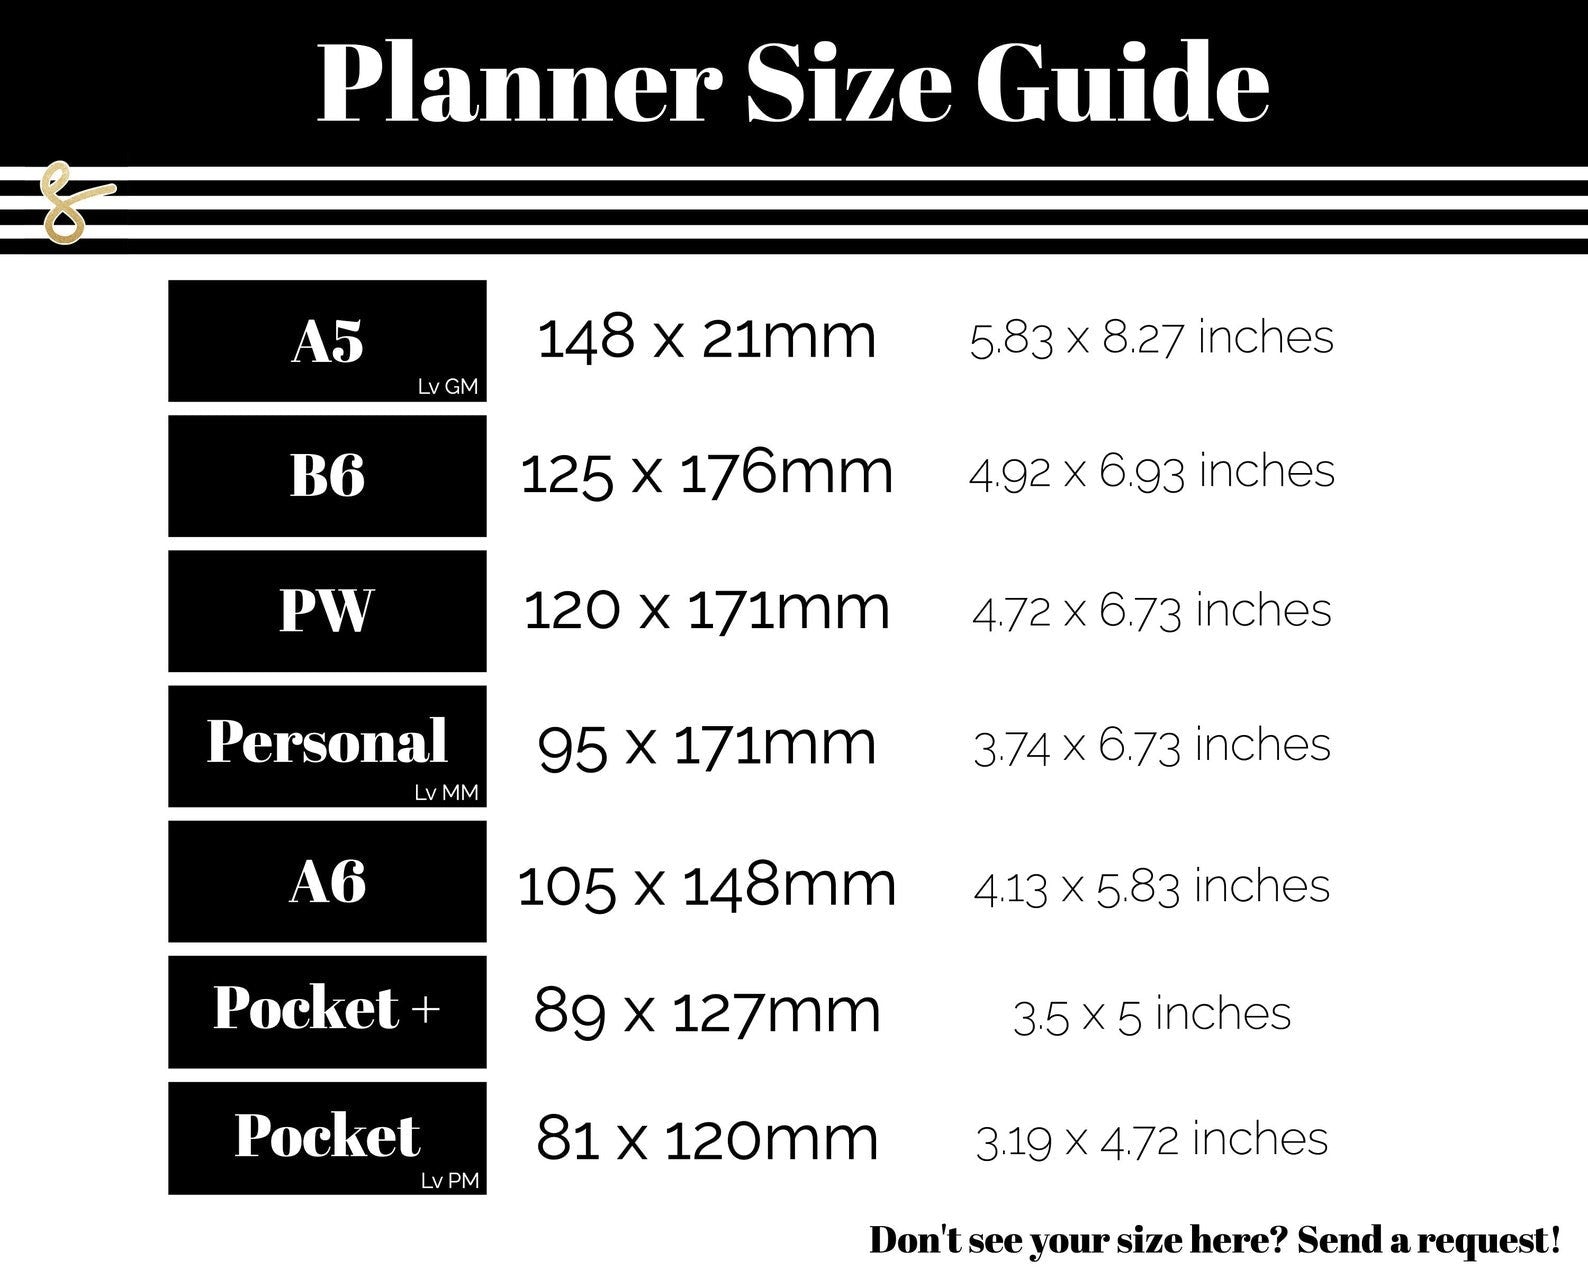 Purple Plant Pots - Spring Bundle saving 25% - Fits A5, B6, Personal Wide, FCC, Personal, A6, Pocket +, Pocket, Mini Ring Planners